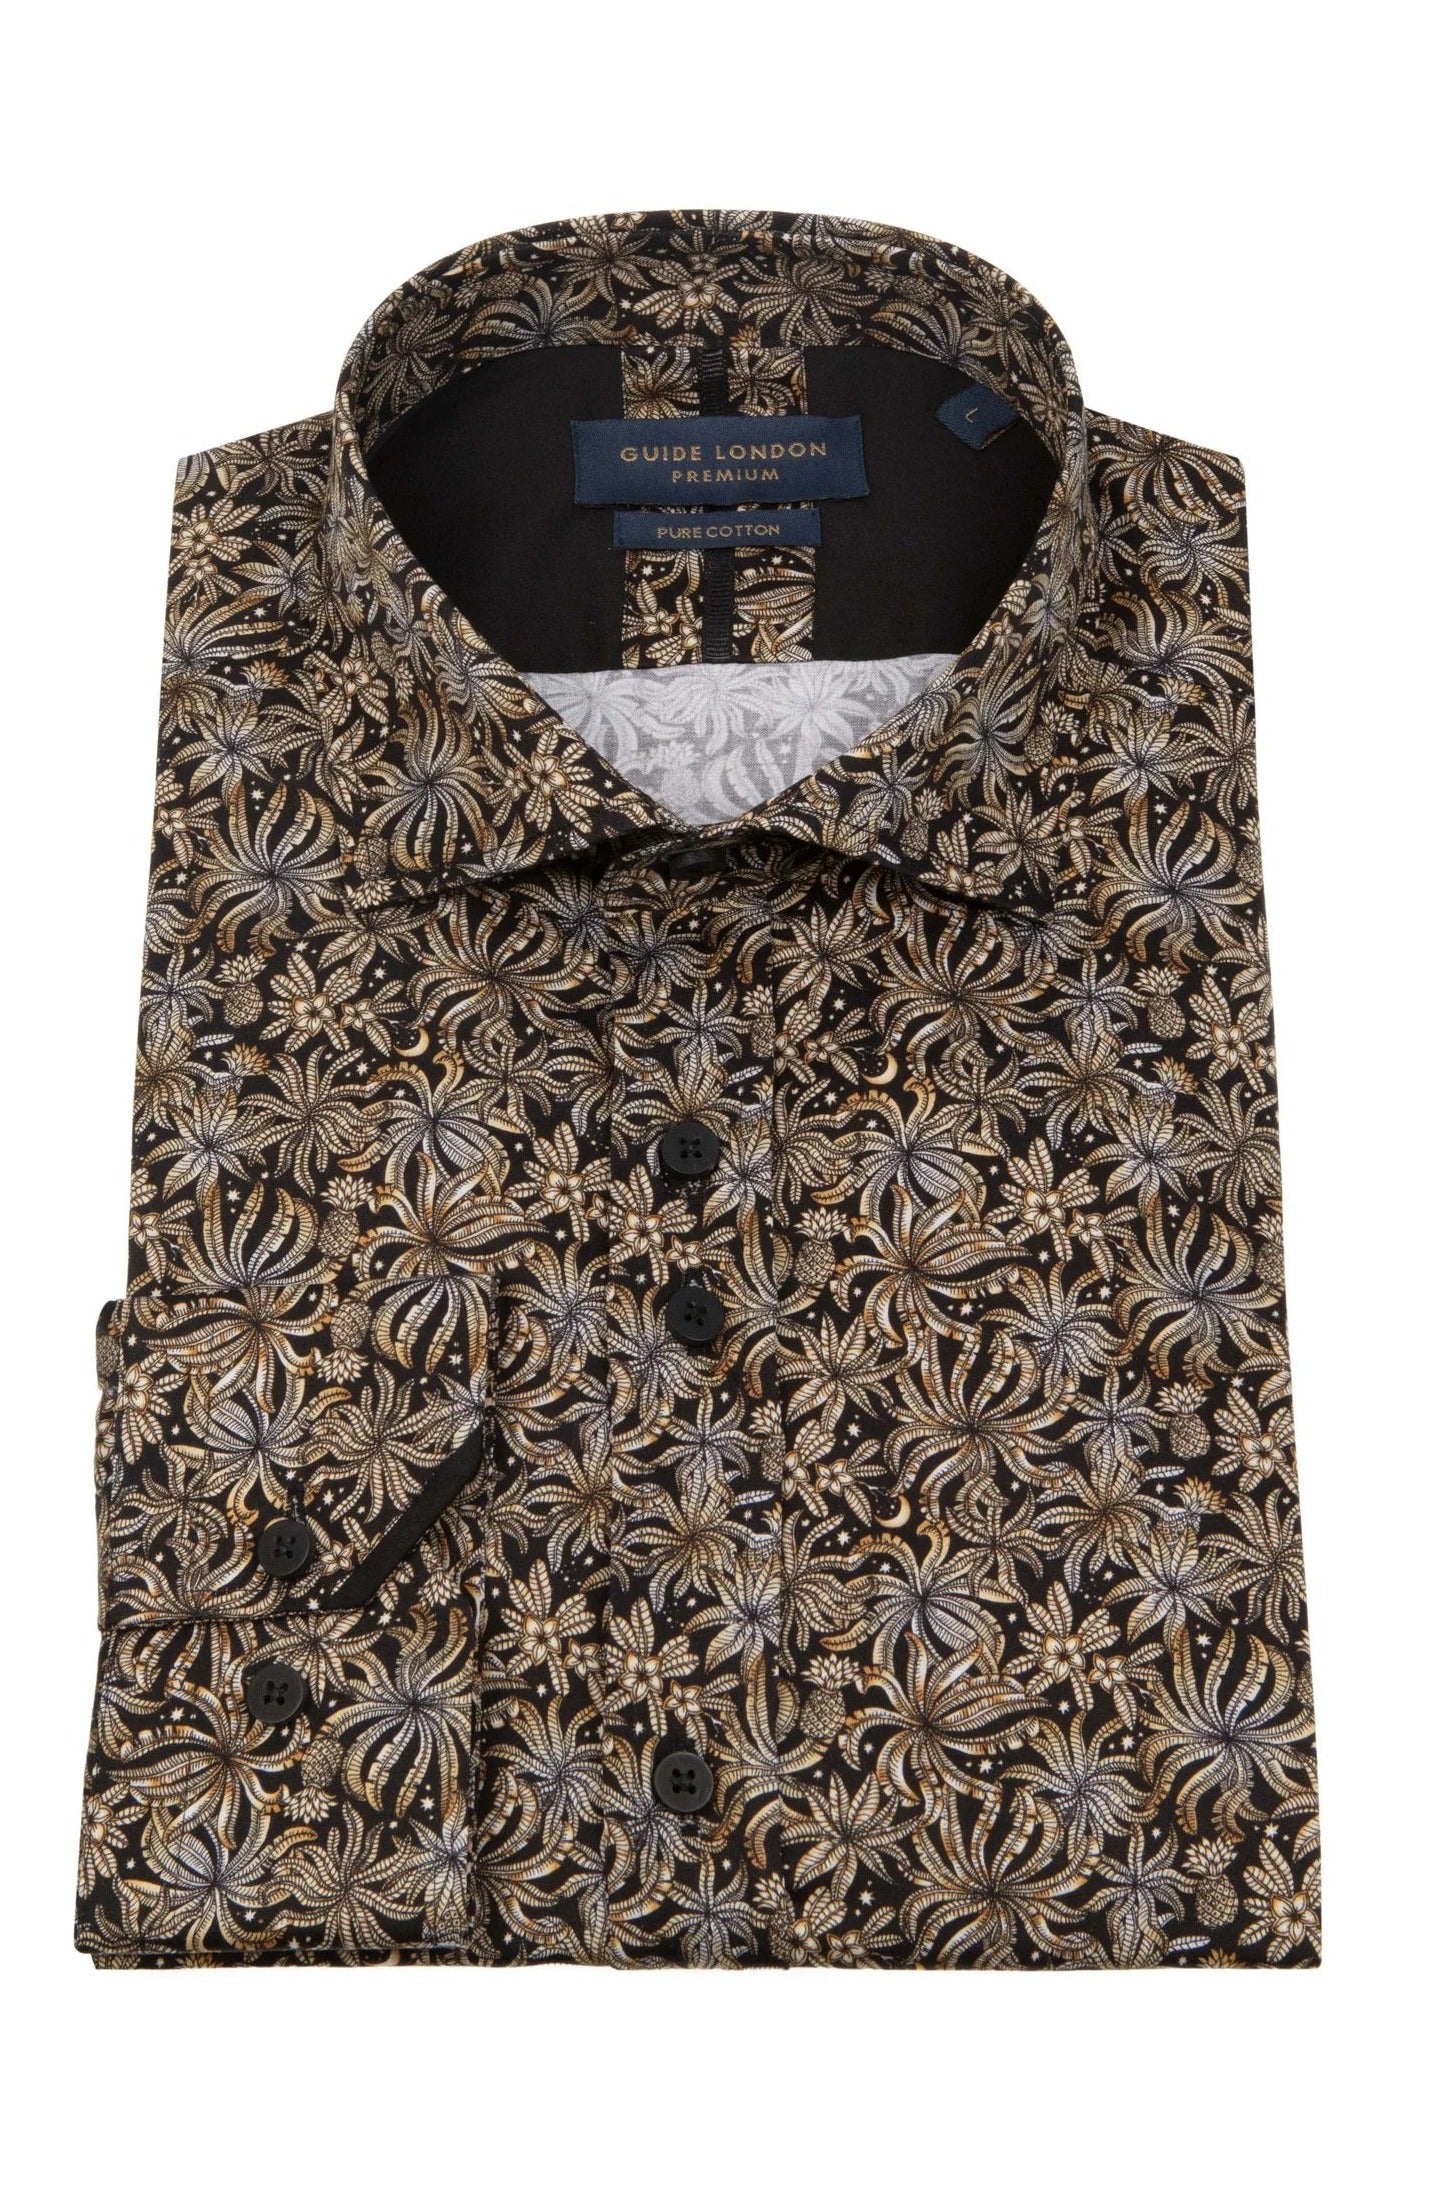 Guide London Long Sleeve Floral Long Sleeve Cotton Shirt LS76778 - Black/Tan